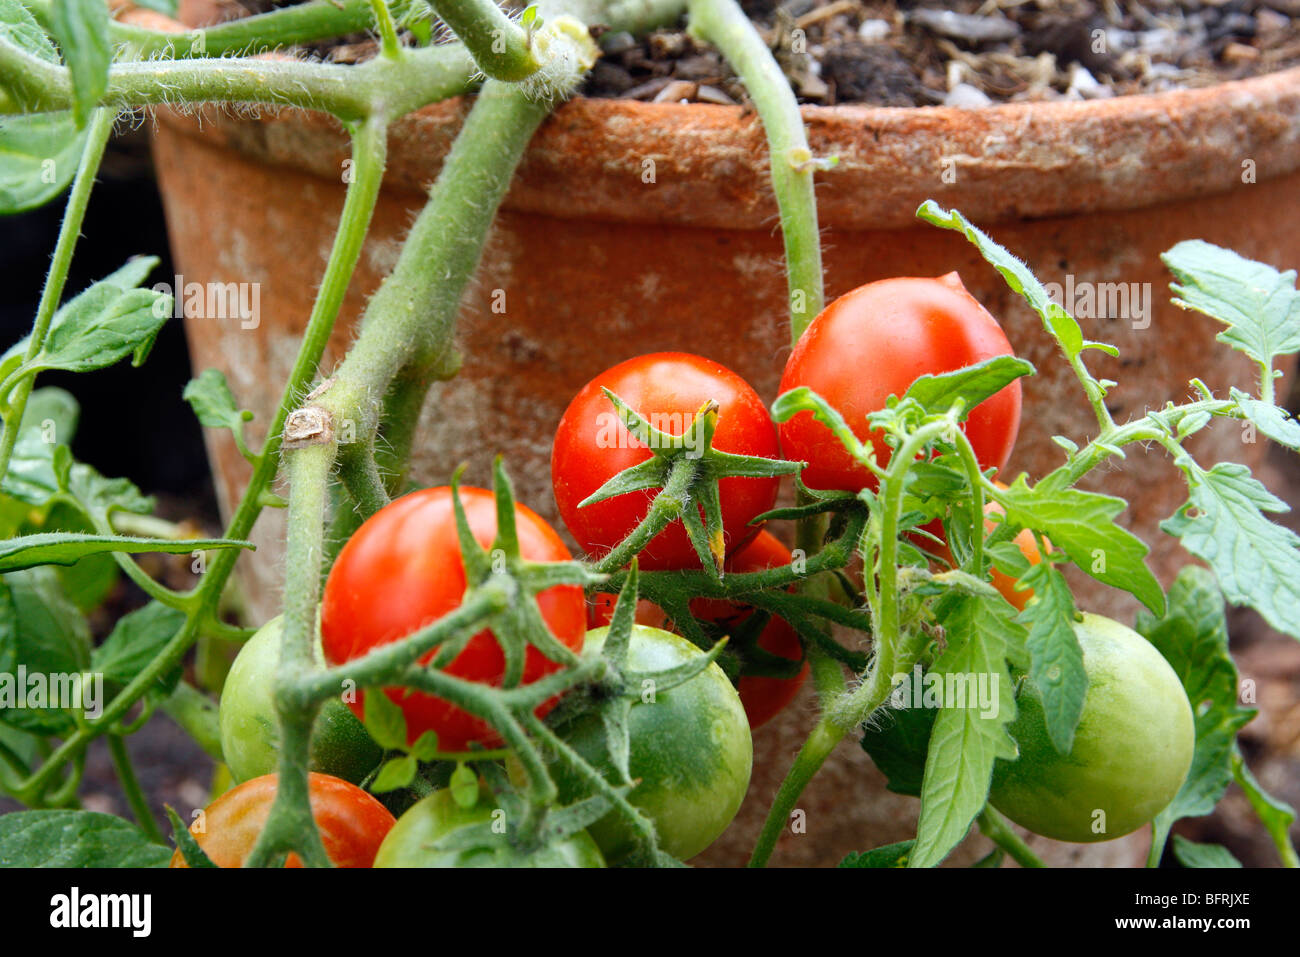 Tumbling Tomaten Sorte "Tornado" in einem Terrakotta-Topf wachsen. Stockfoto